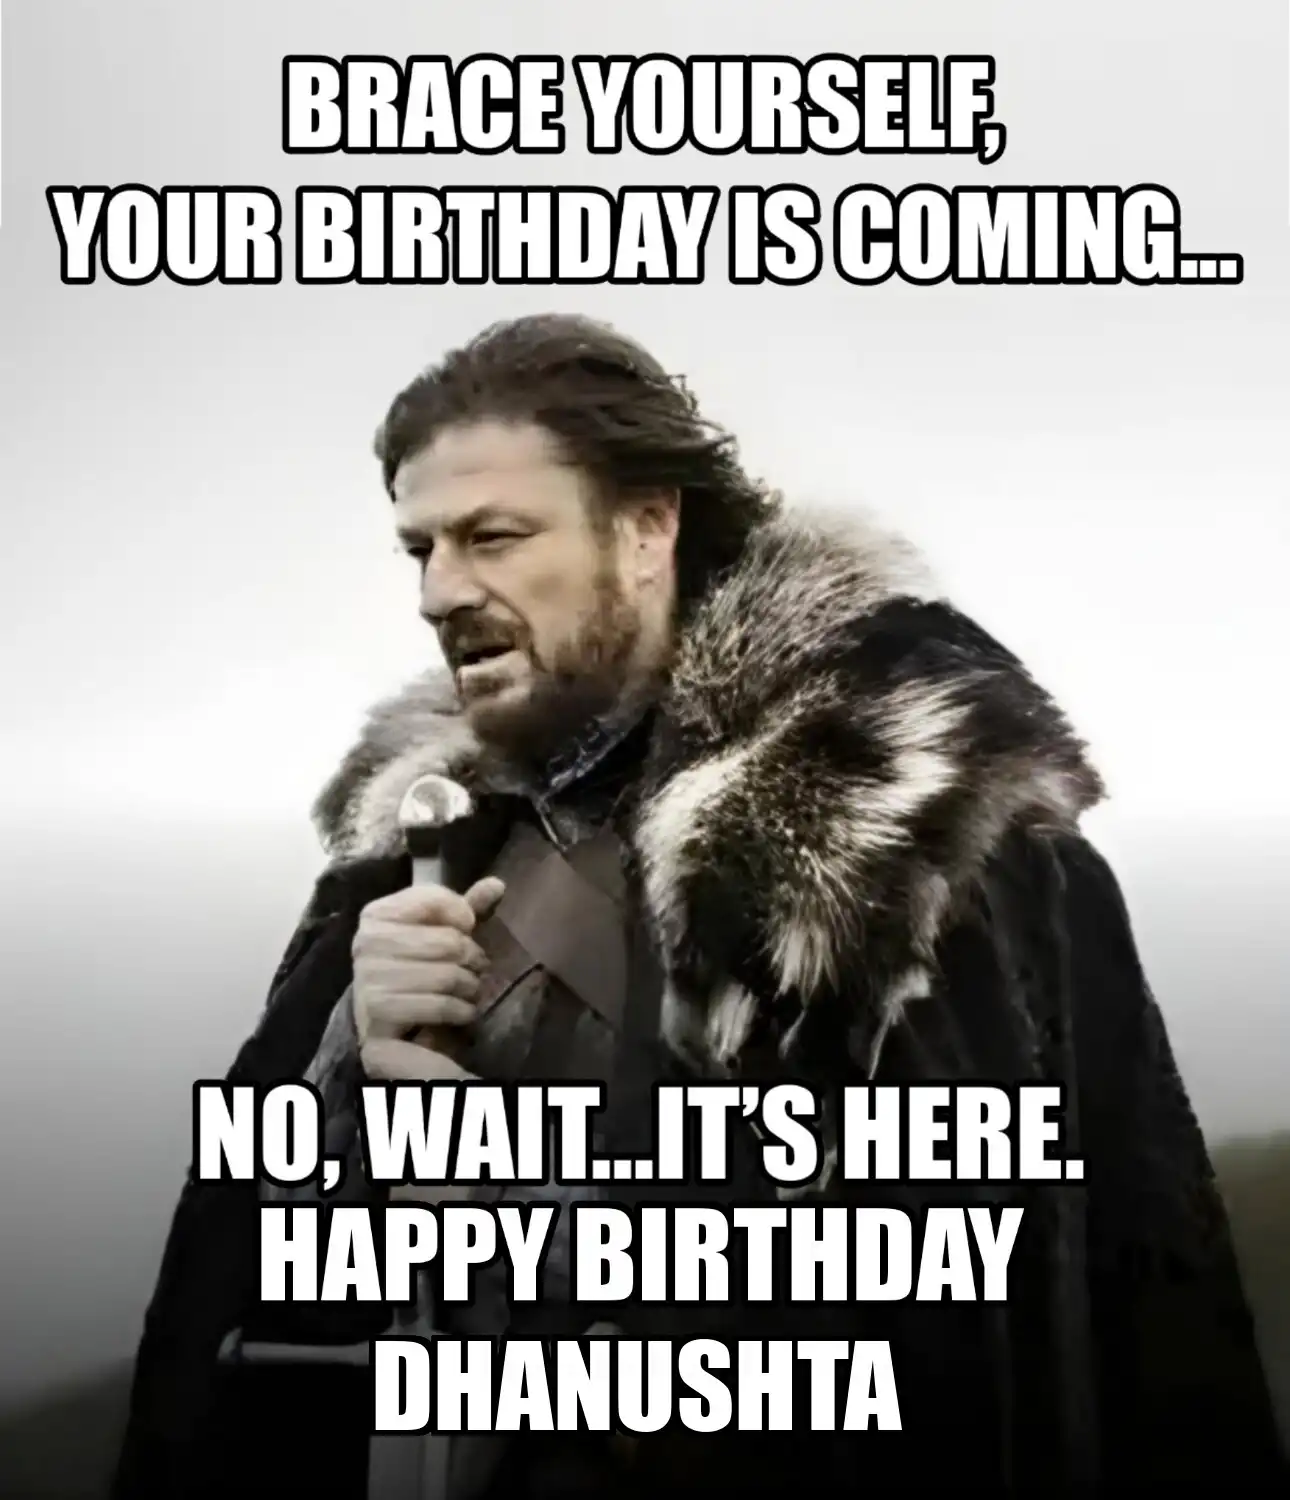 Happy Birthday Dhanushta Brace Yourself Your Birthday Is Coming Meme